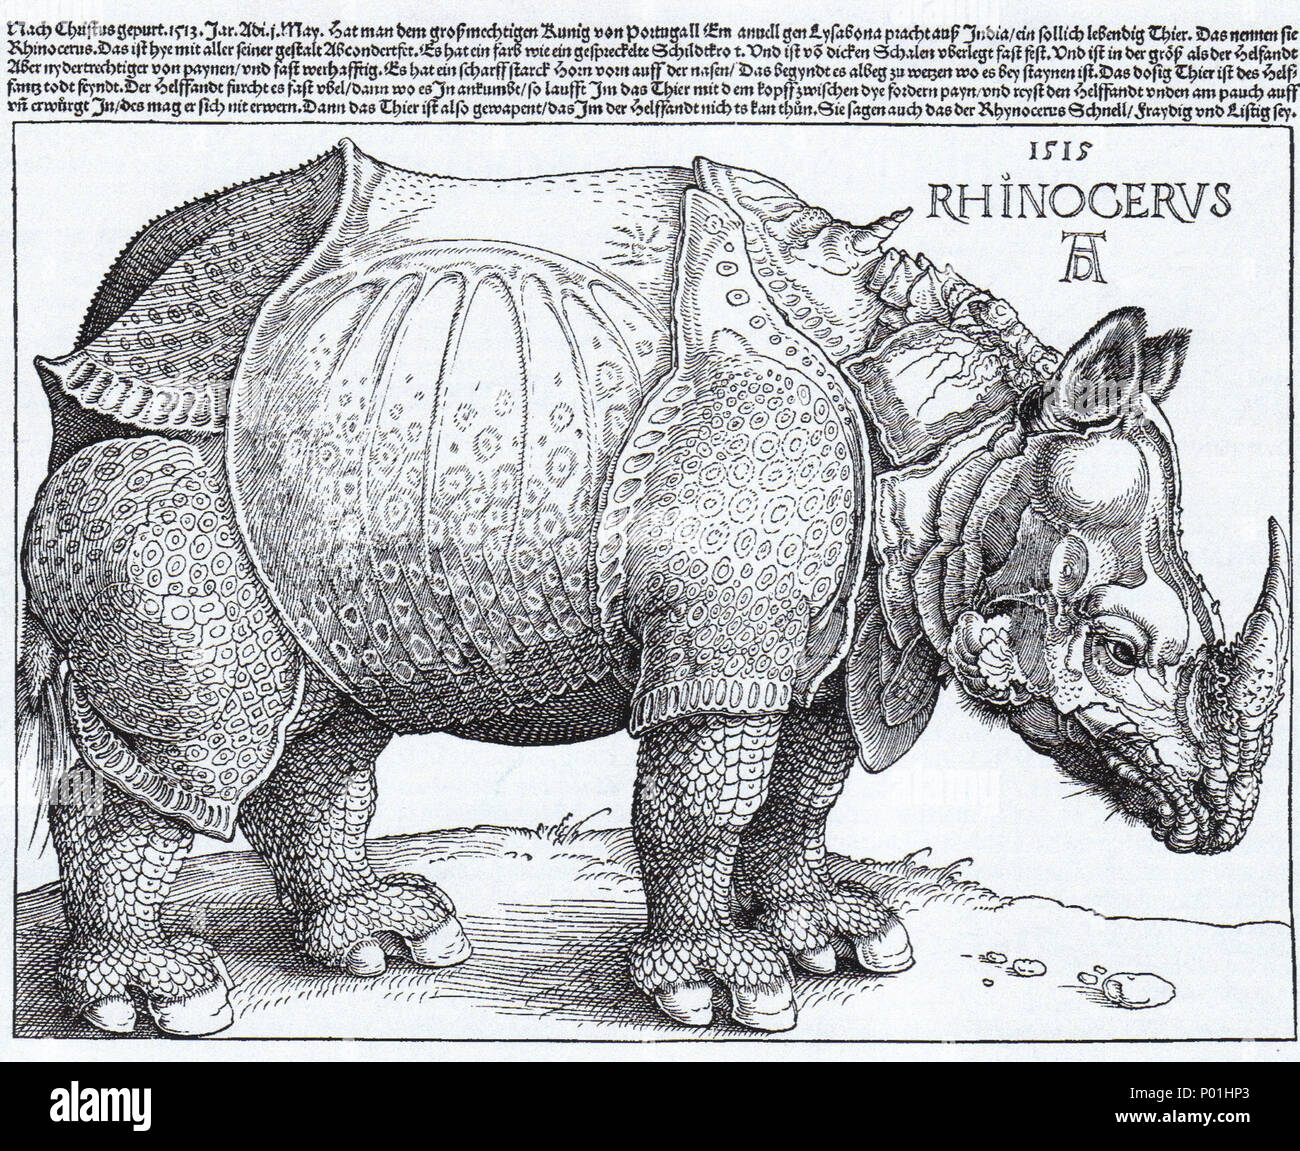 8 Rhinocerus xilografia (1515) Albrecht Dürer Foto Stock